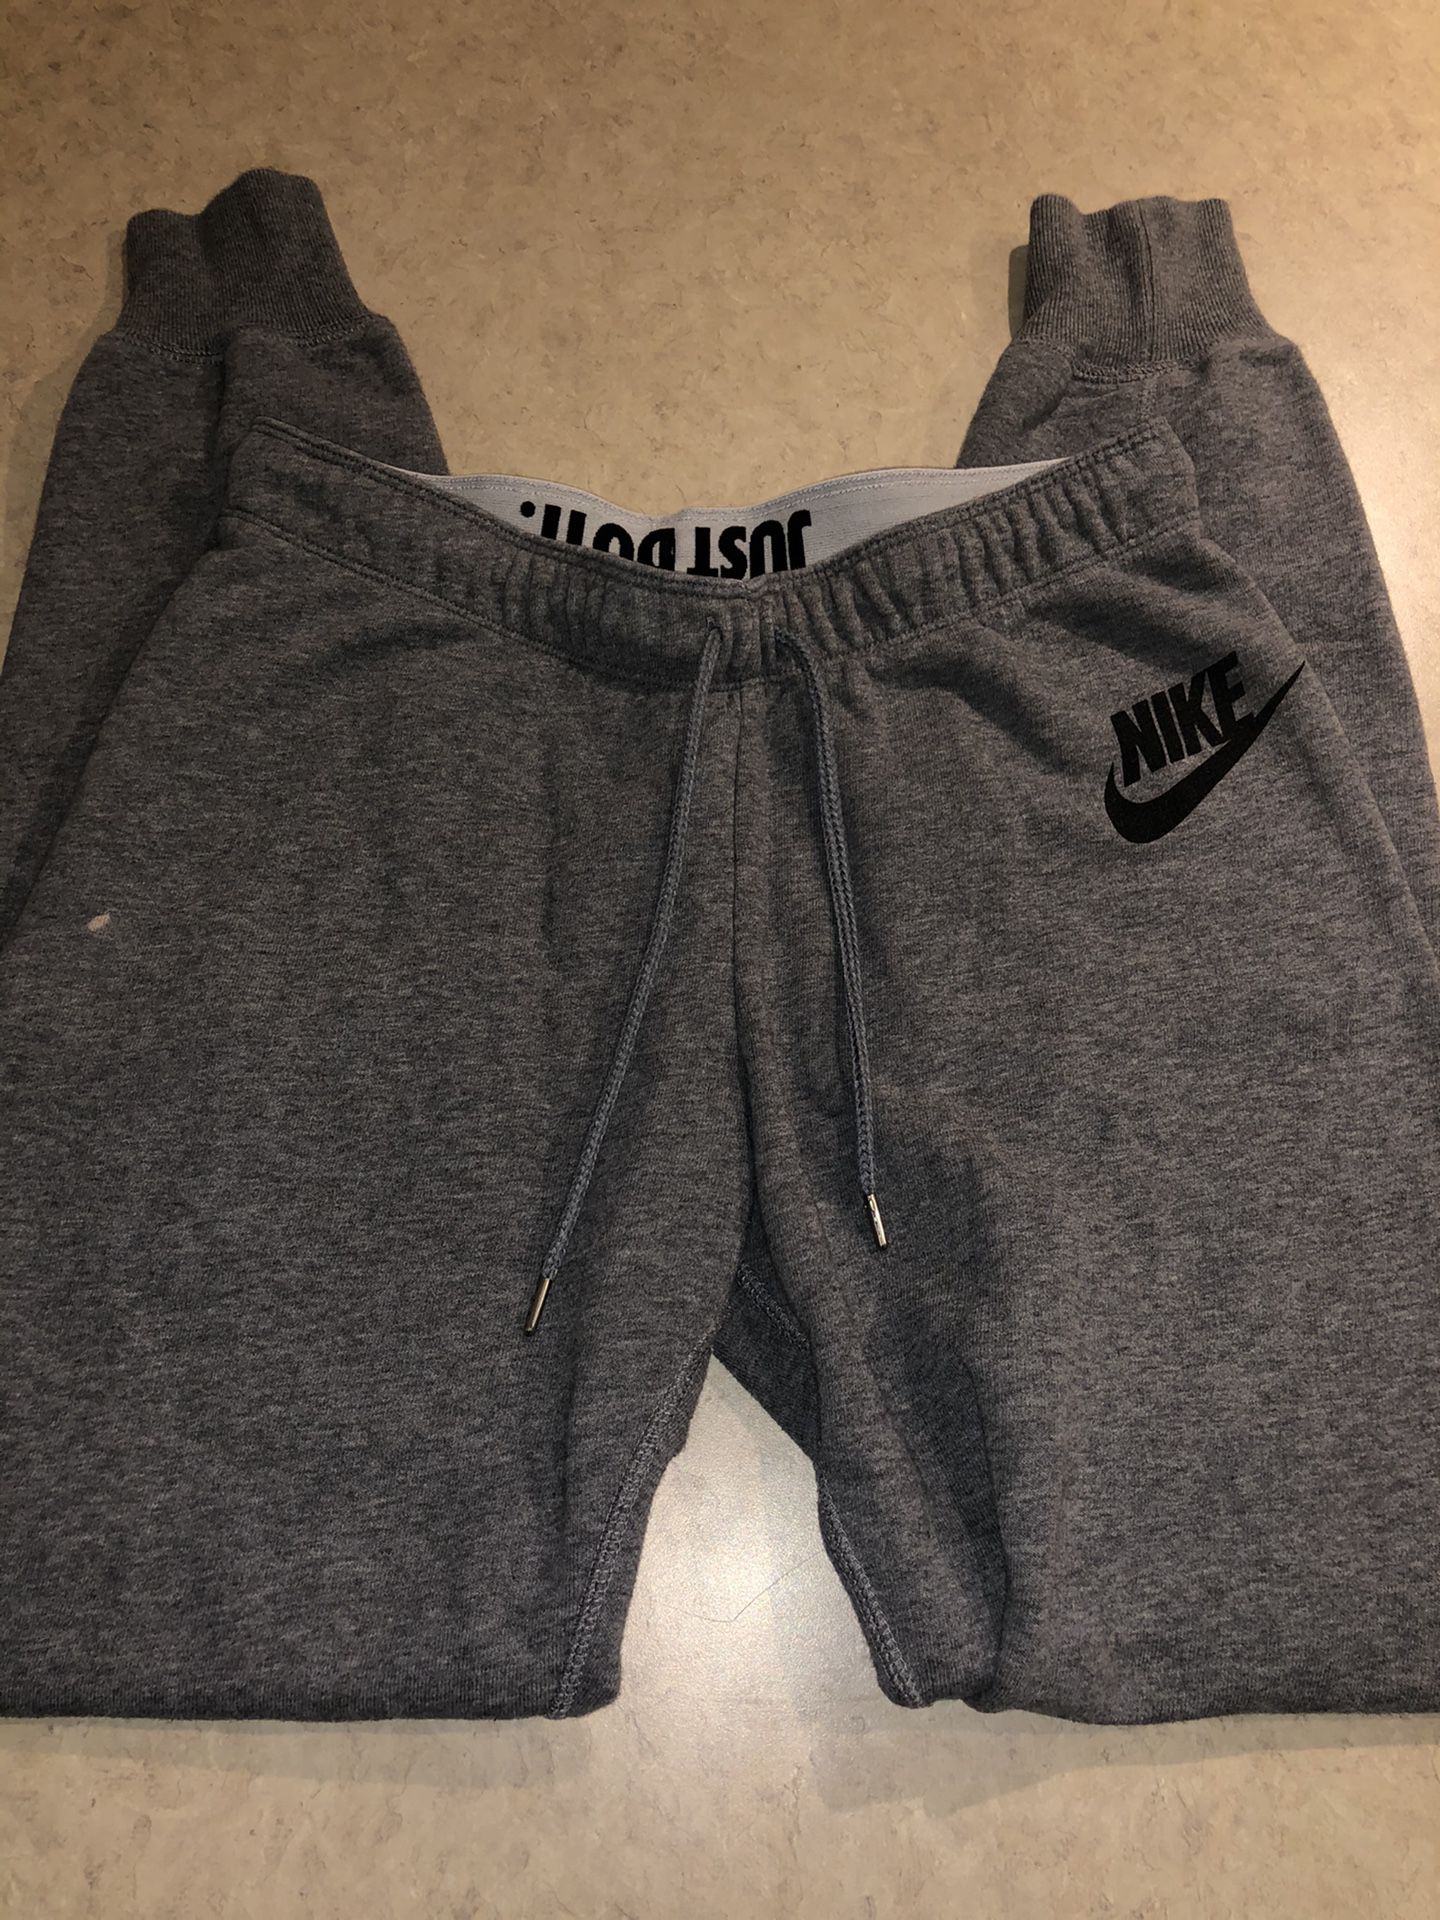 Nike women joggers size medium